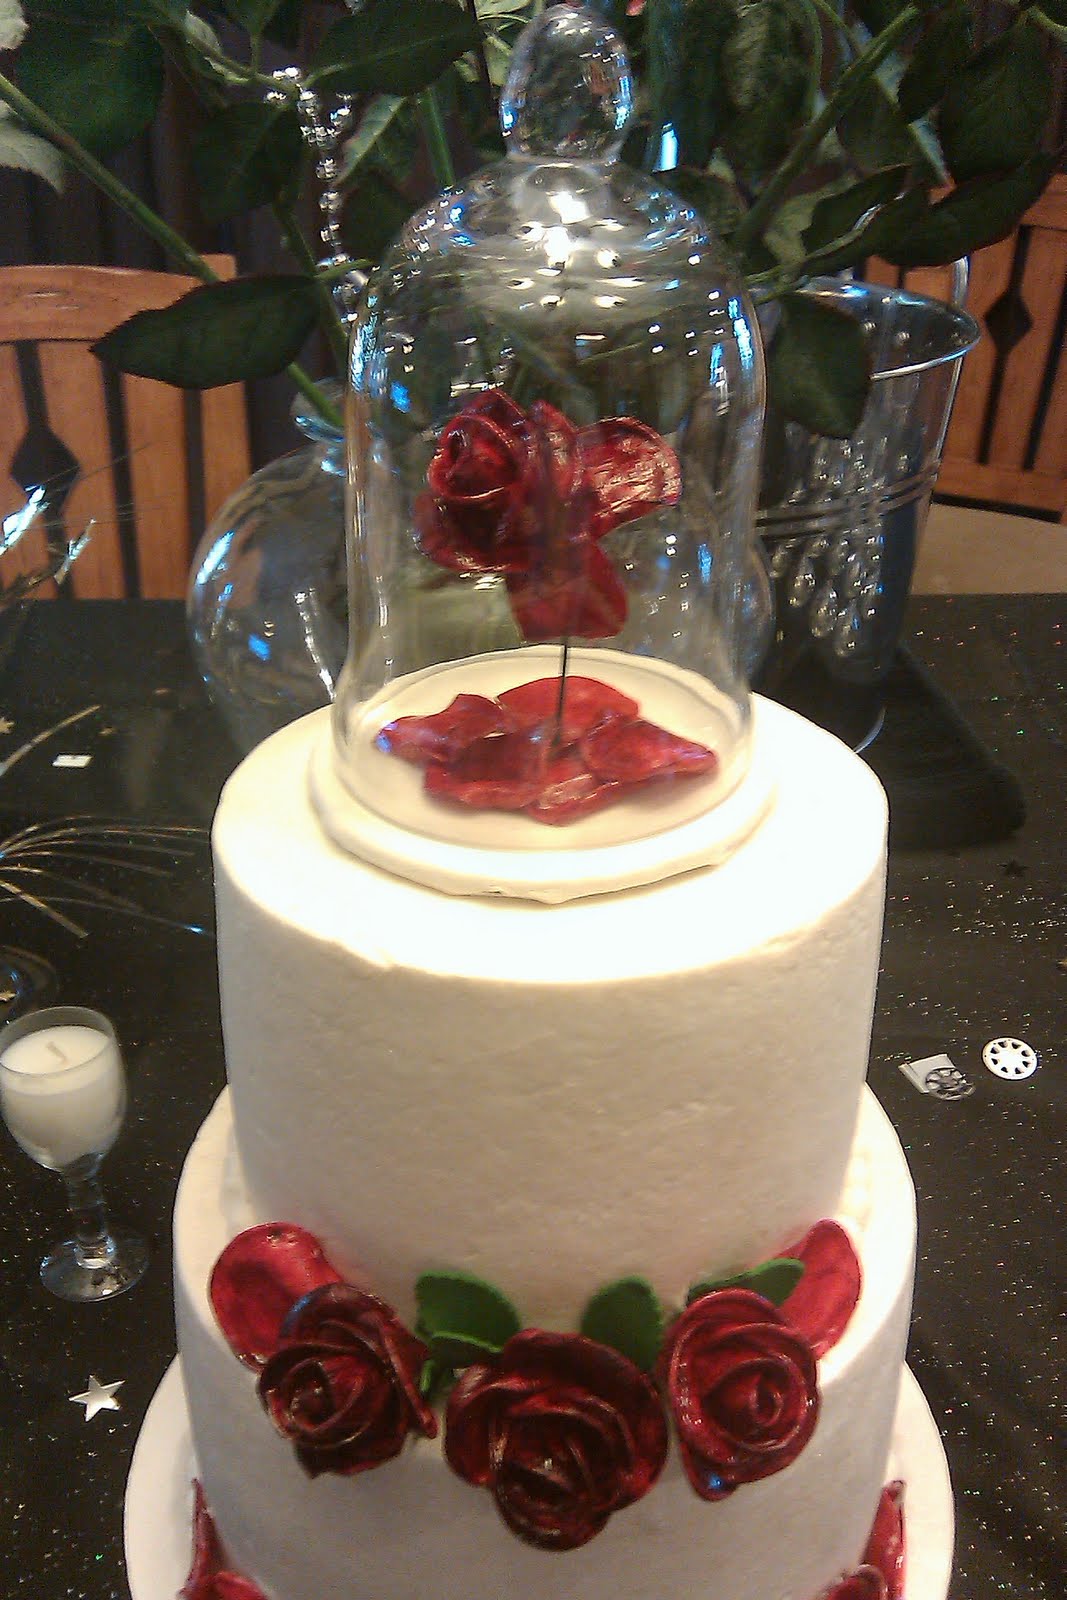 Beauty and the beast wedding cake!